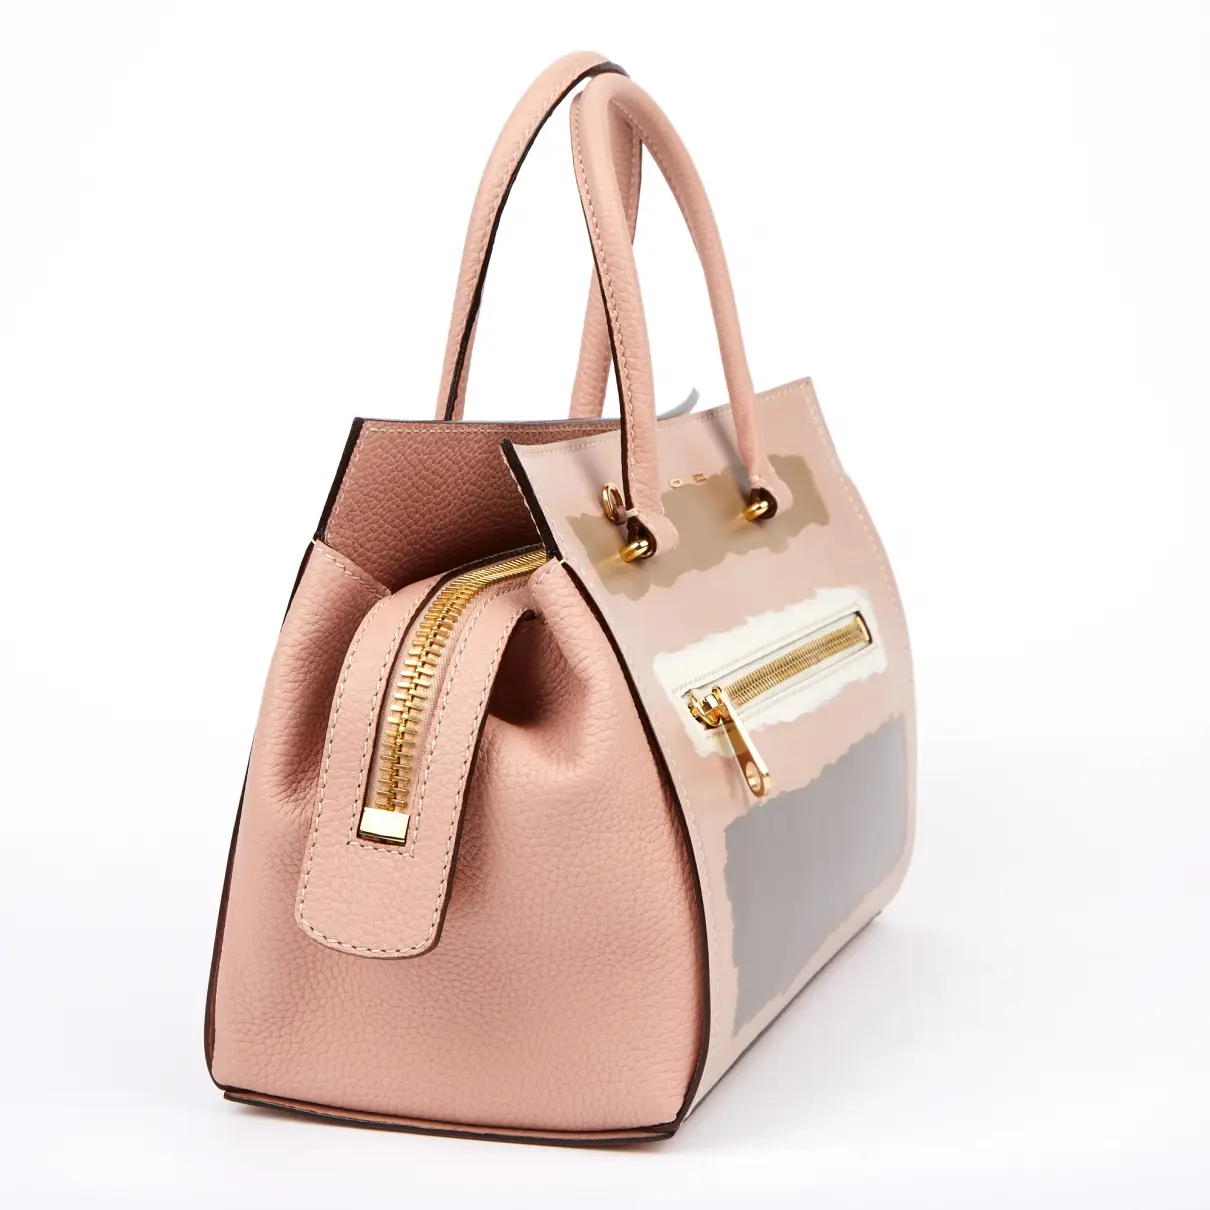 Vbh Leather handbag for sale